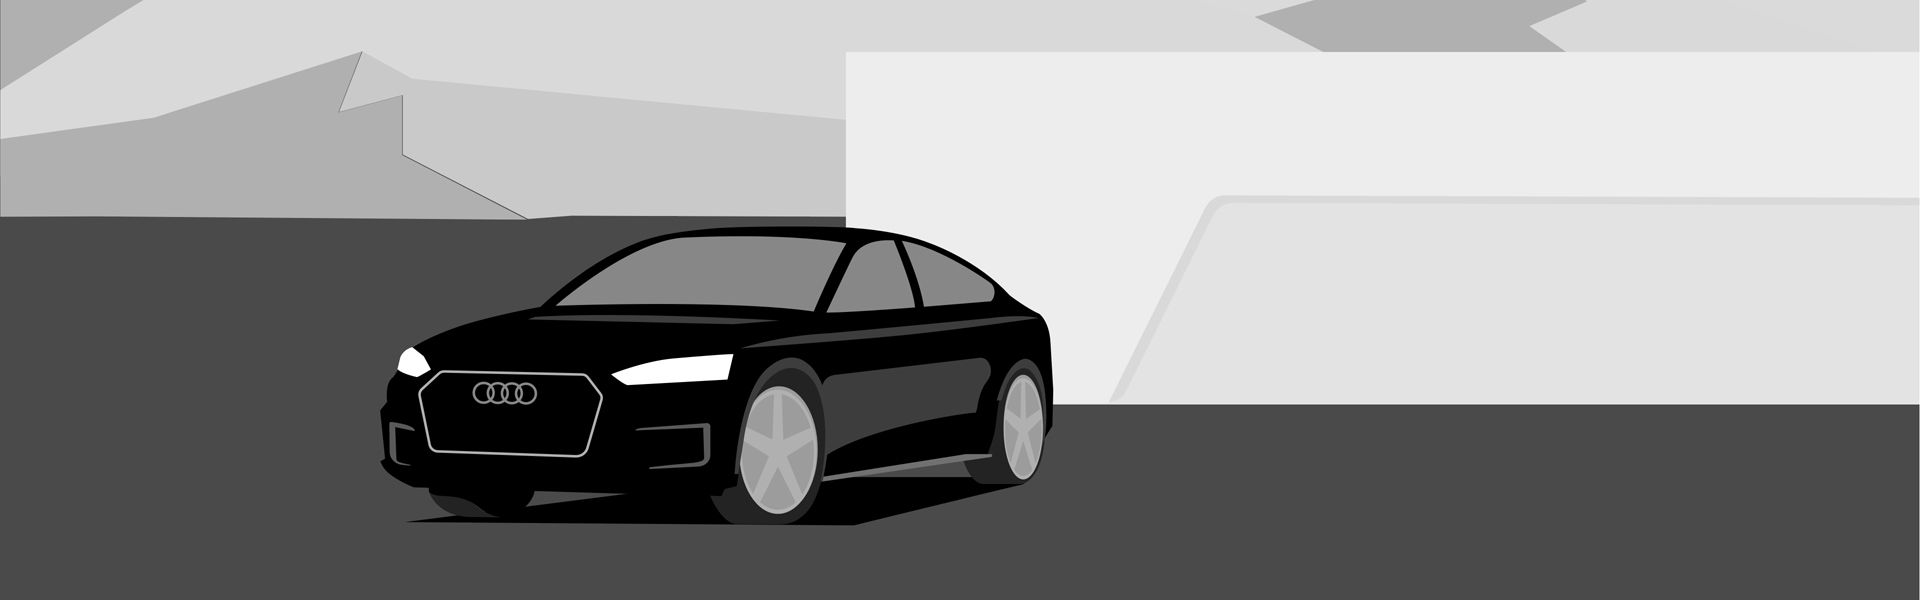 Drawing of an Audi car